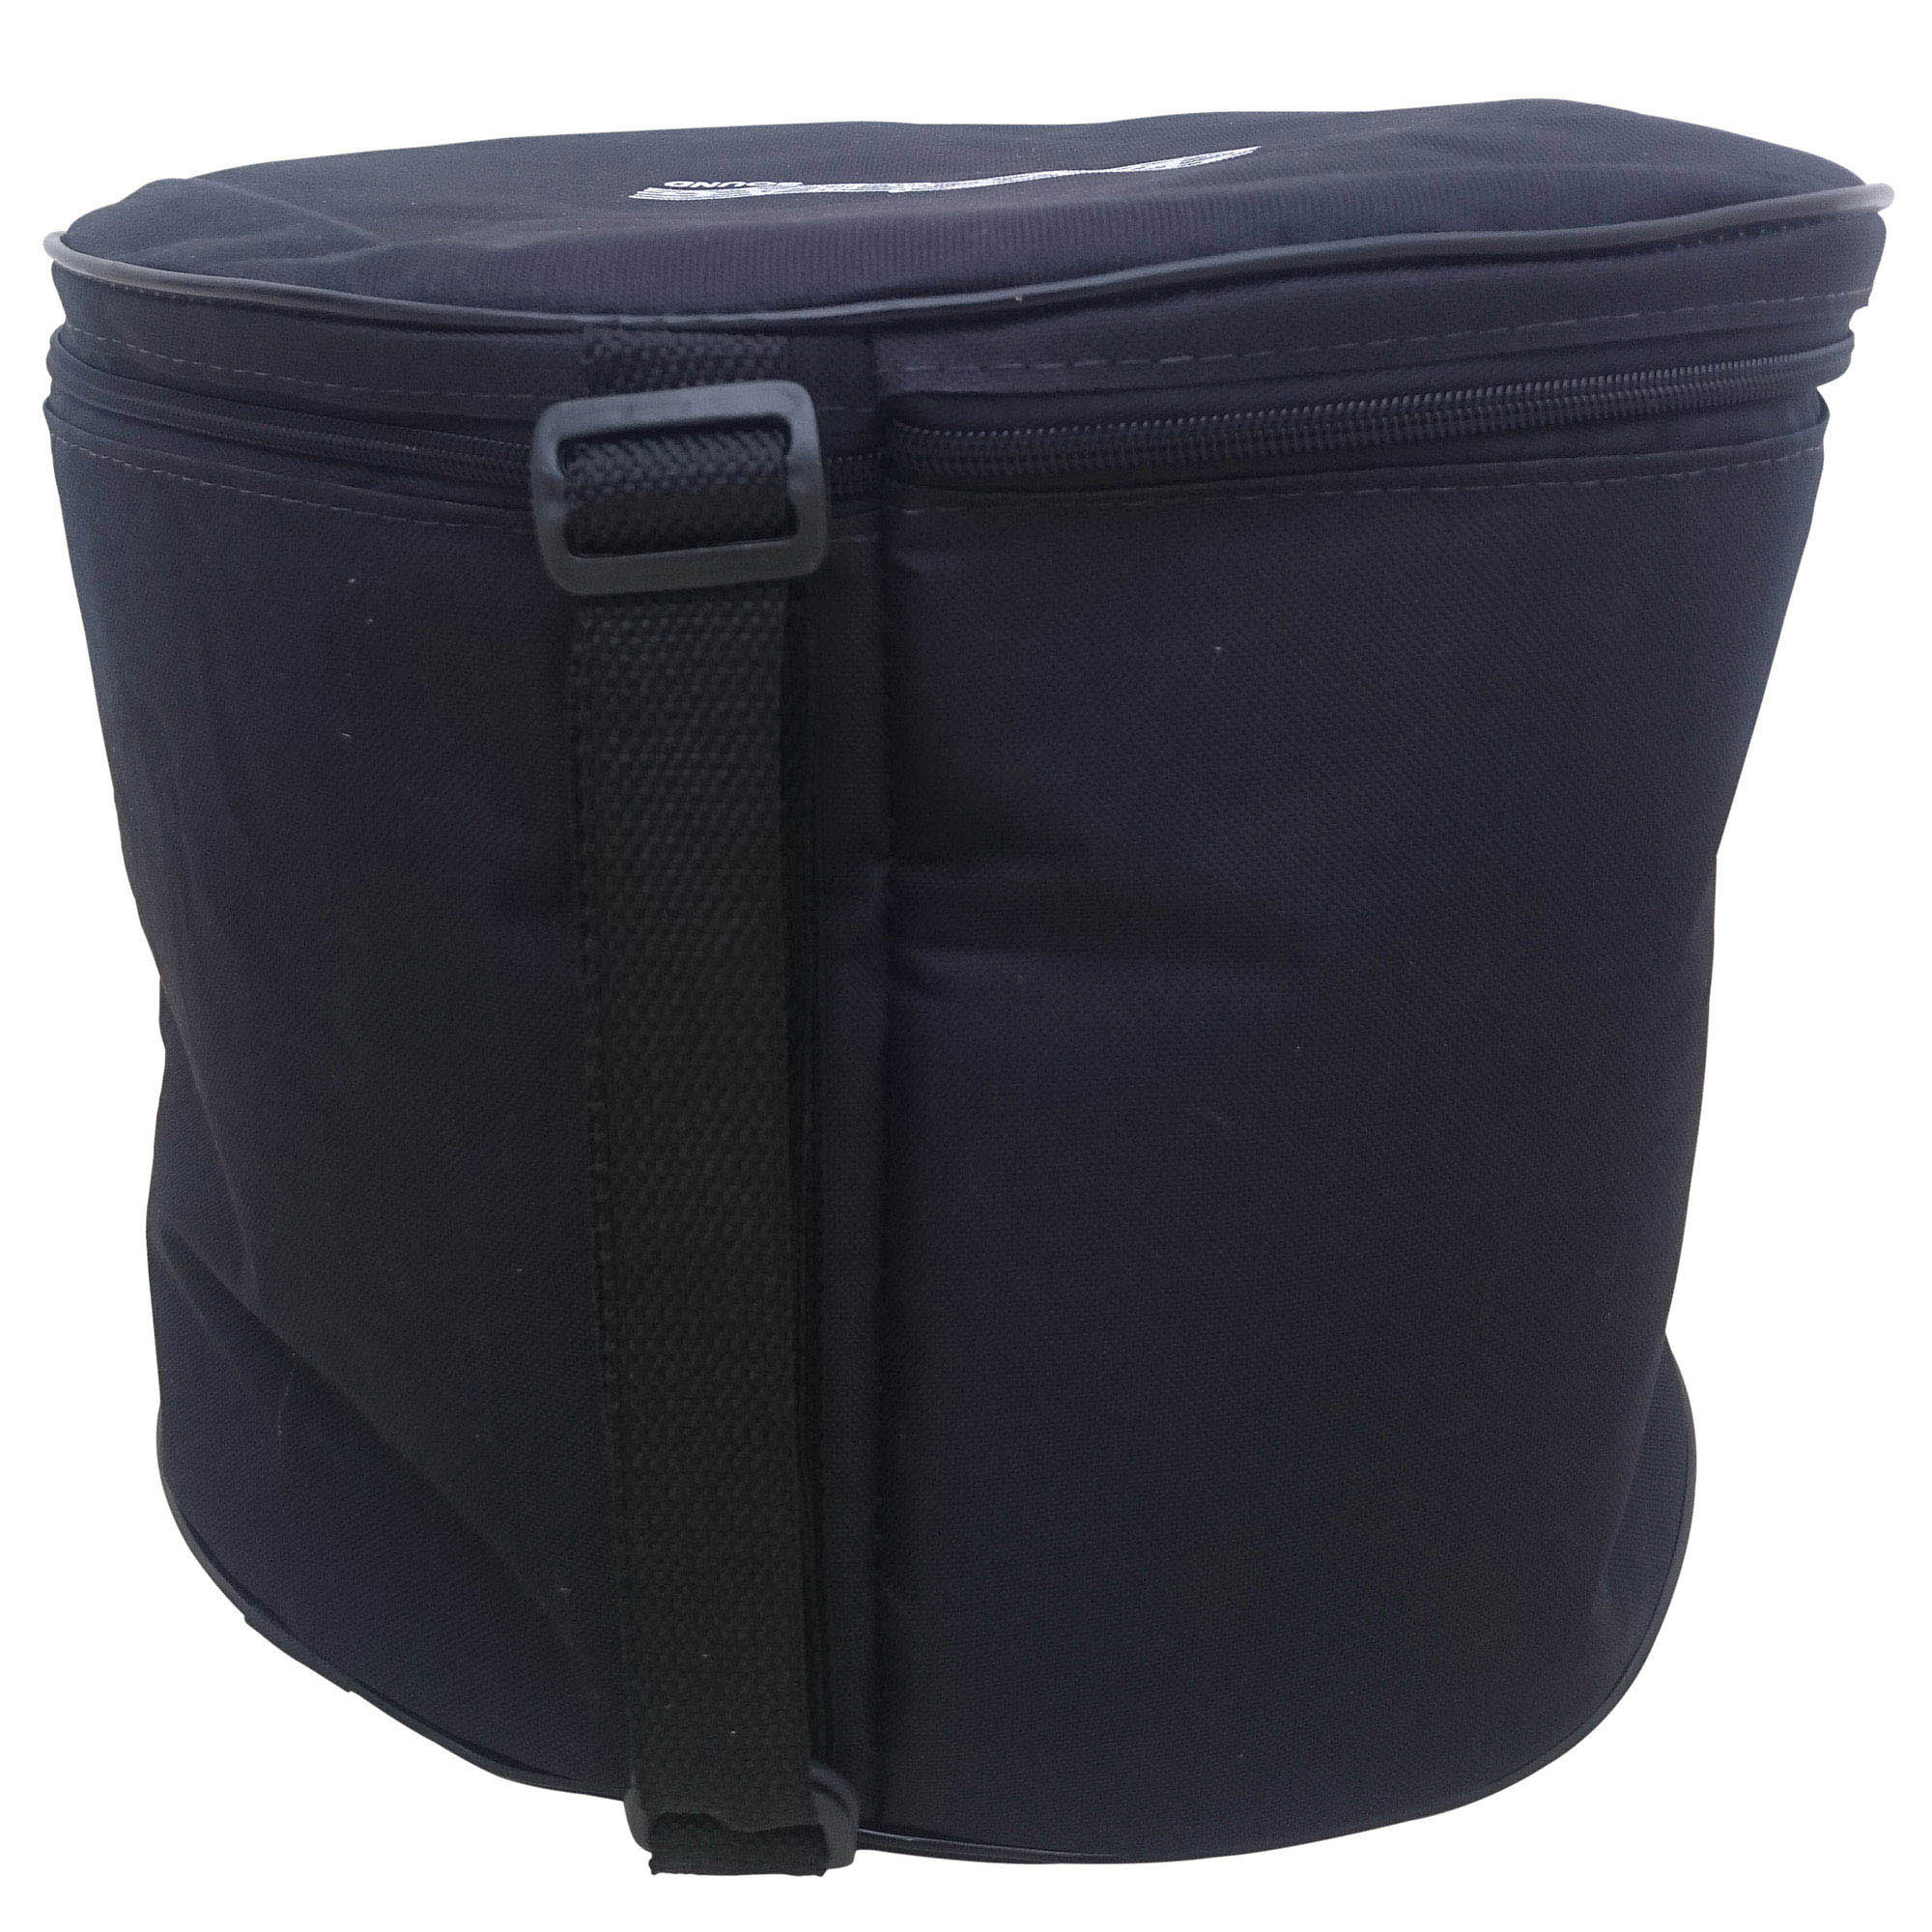 Capa Bag Extra Luxo para Surdo Pagode 16" x 66 cm CLAVE & BAG. Totalmente acolchoado